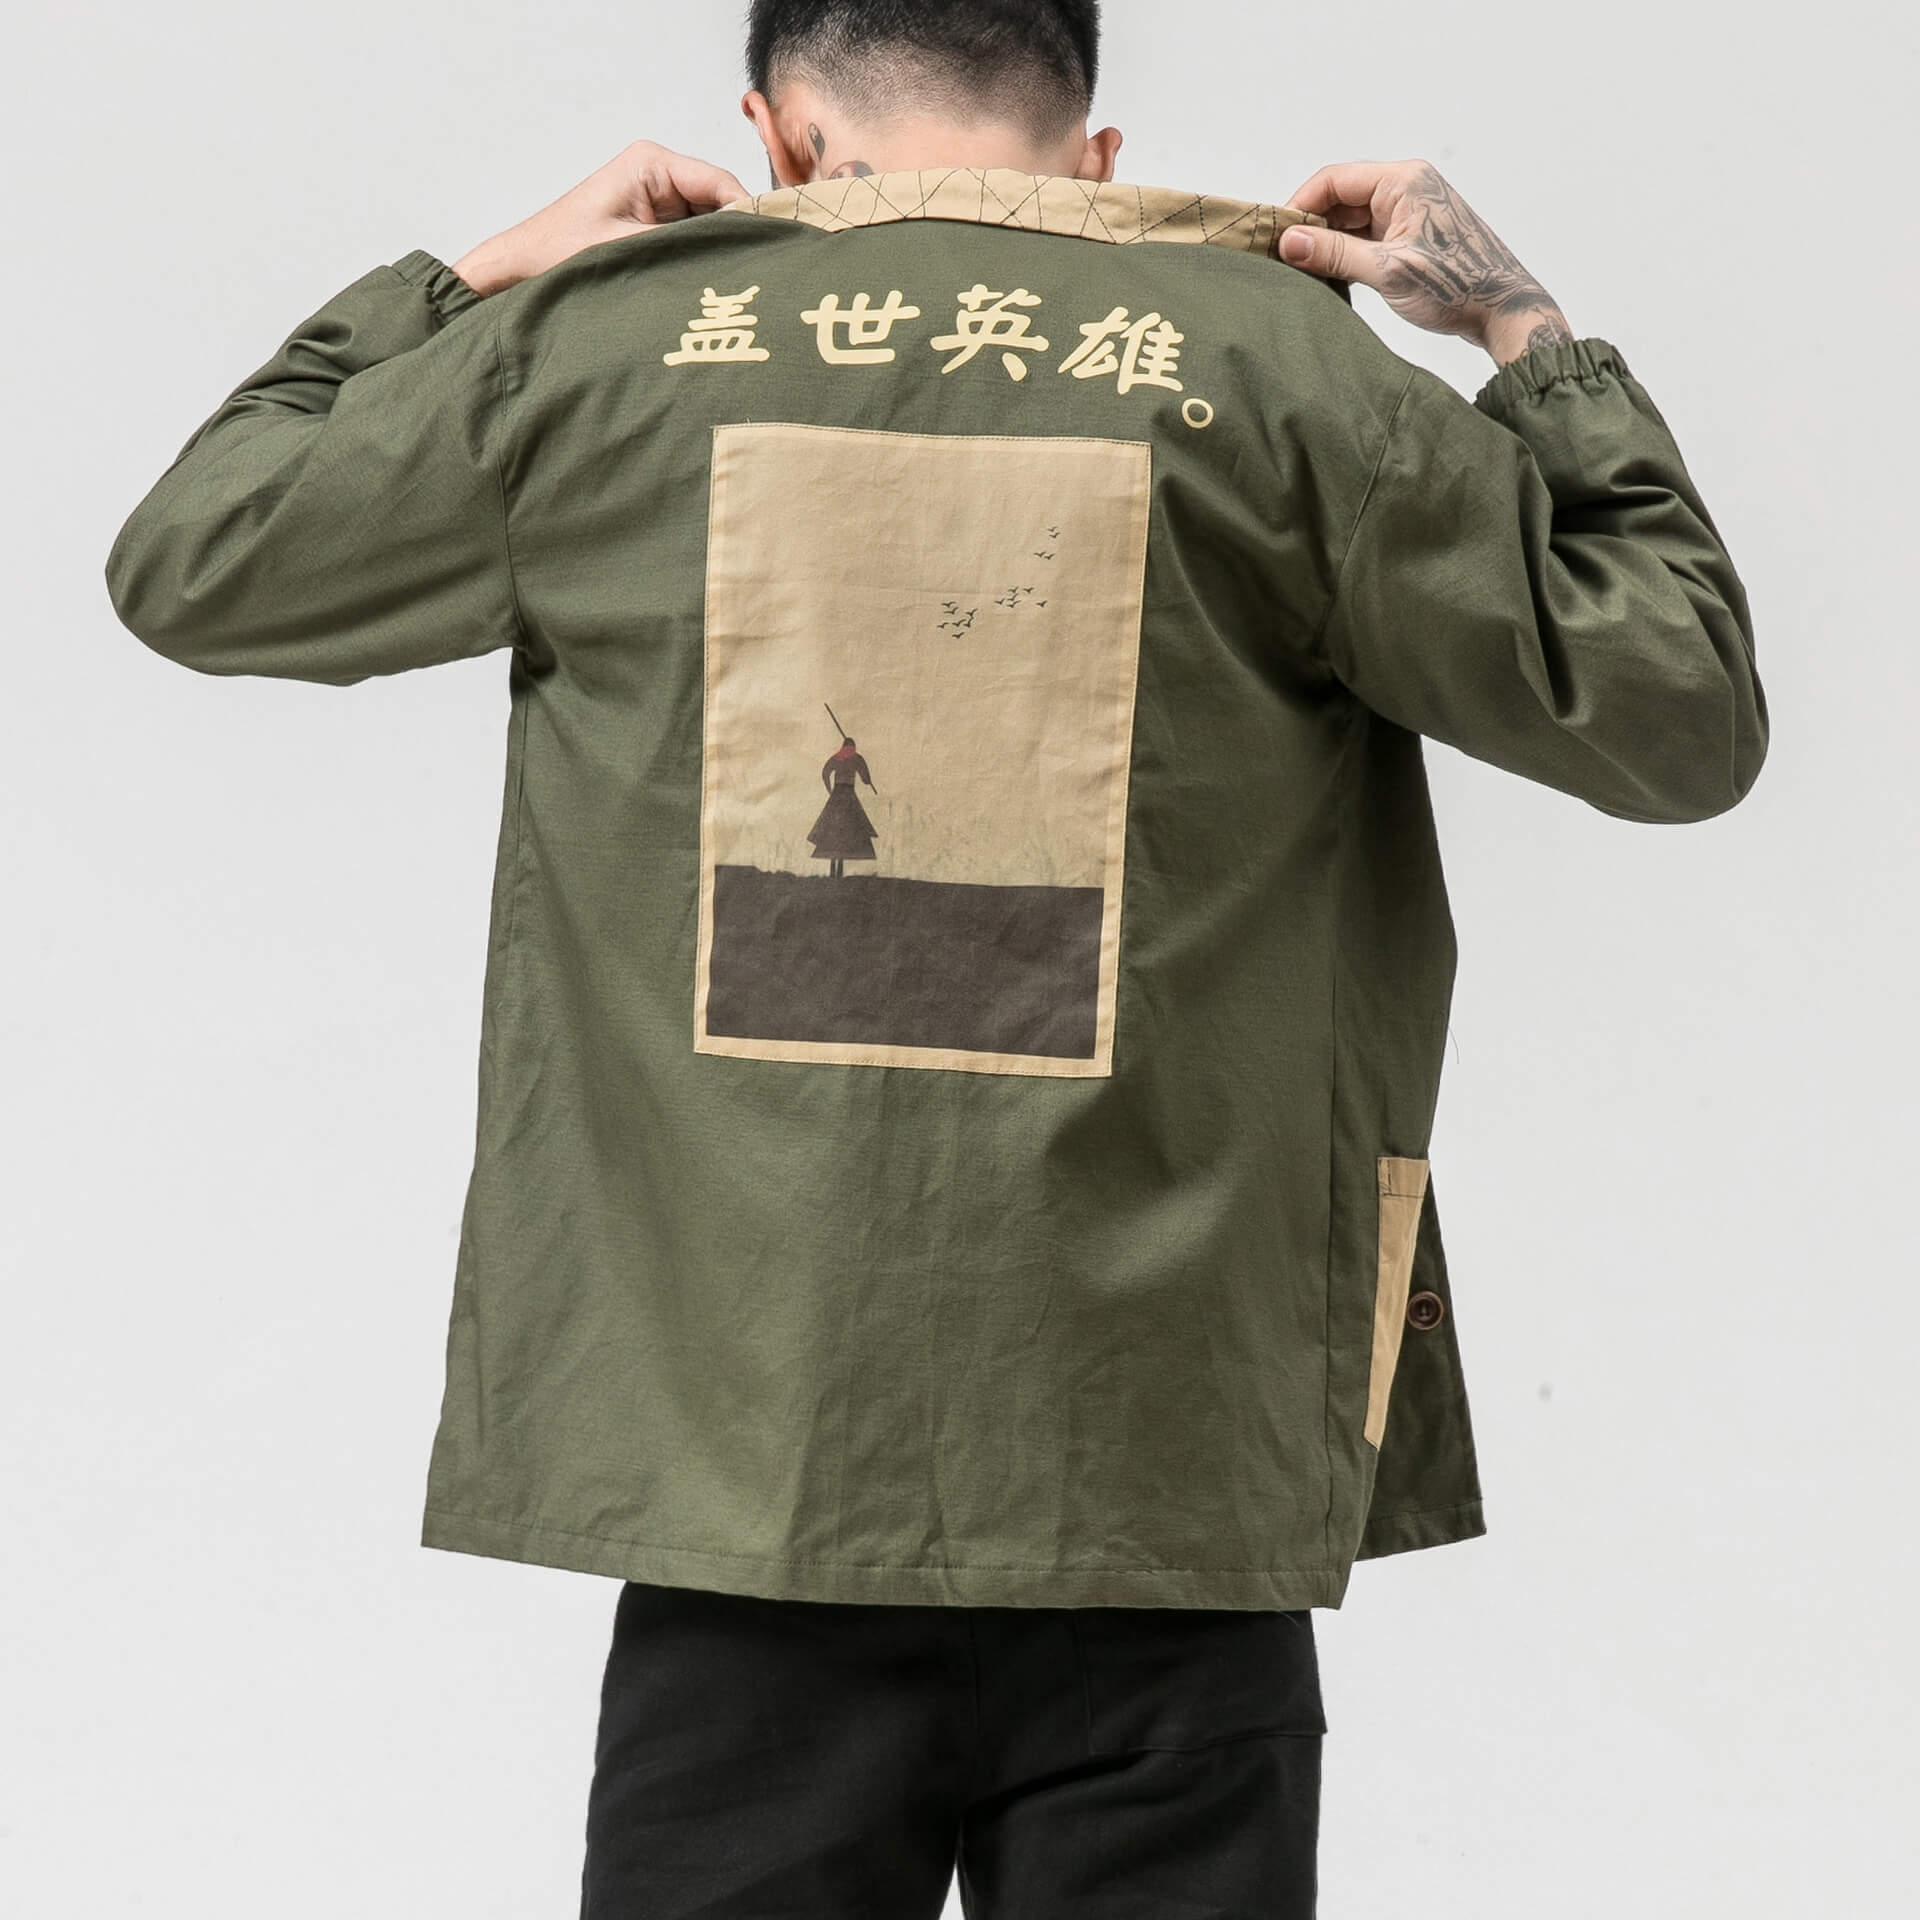 Uysa Shirt Jacket Streetwear Brand Techwear Combat Tactical YUGEN THEORY